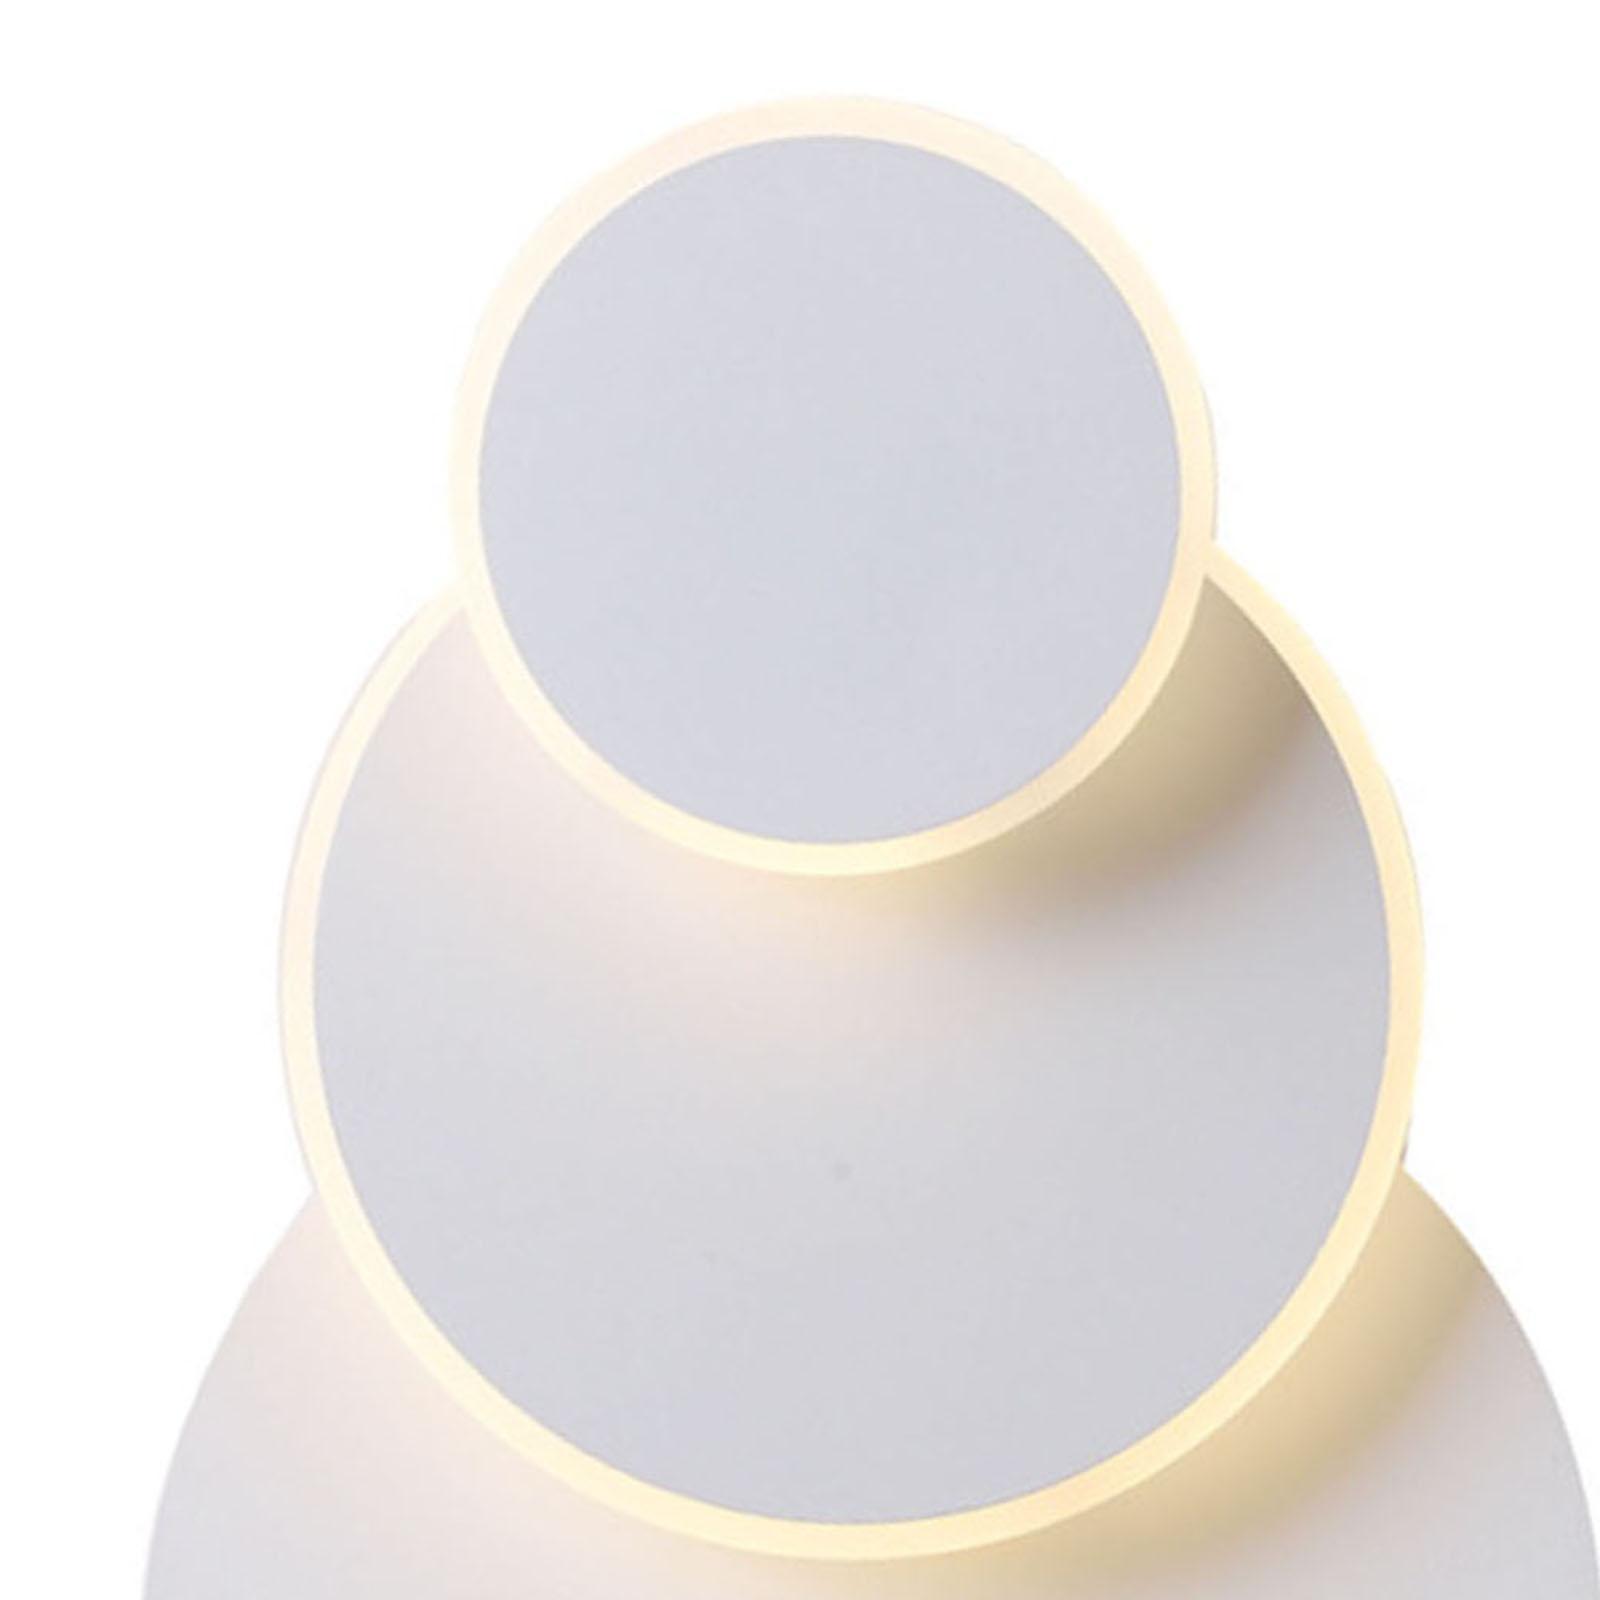 LED Bedside Light Fixture rotating Wall Lamp Living Room 3000k Warm White